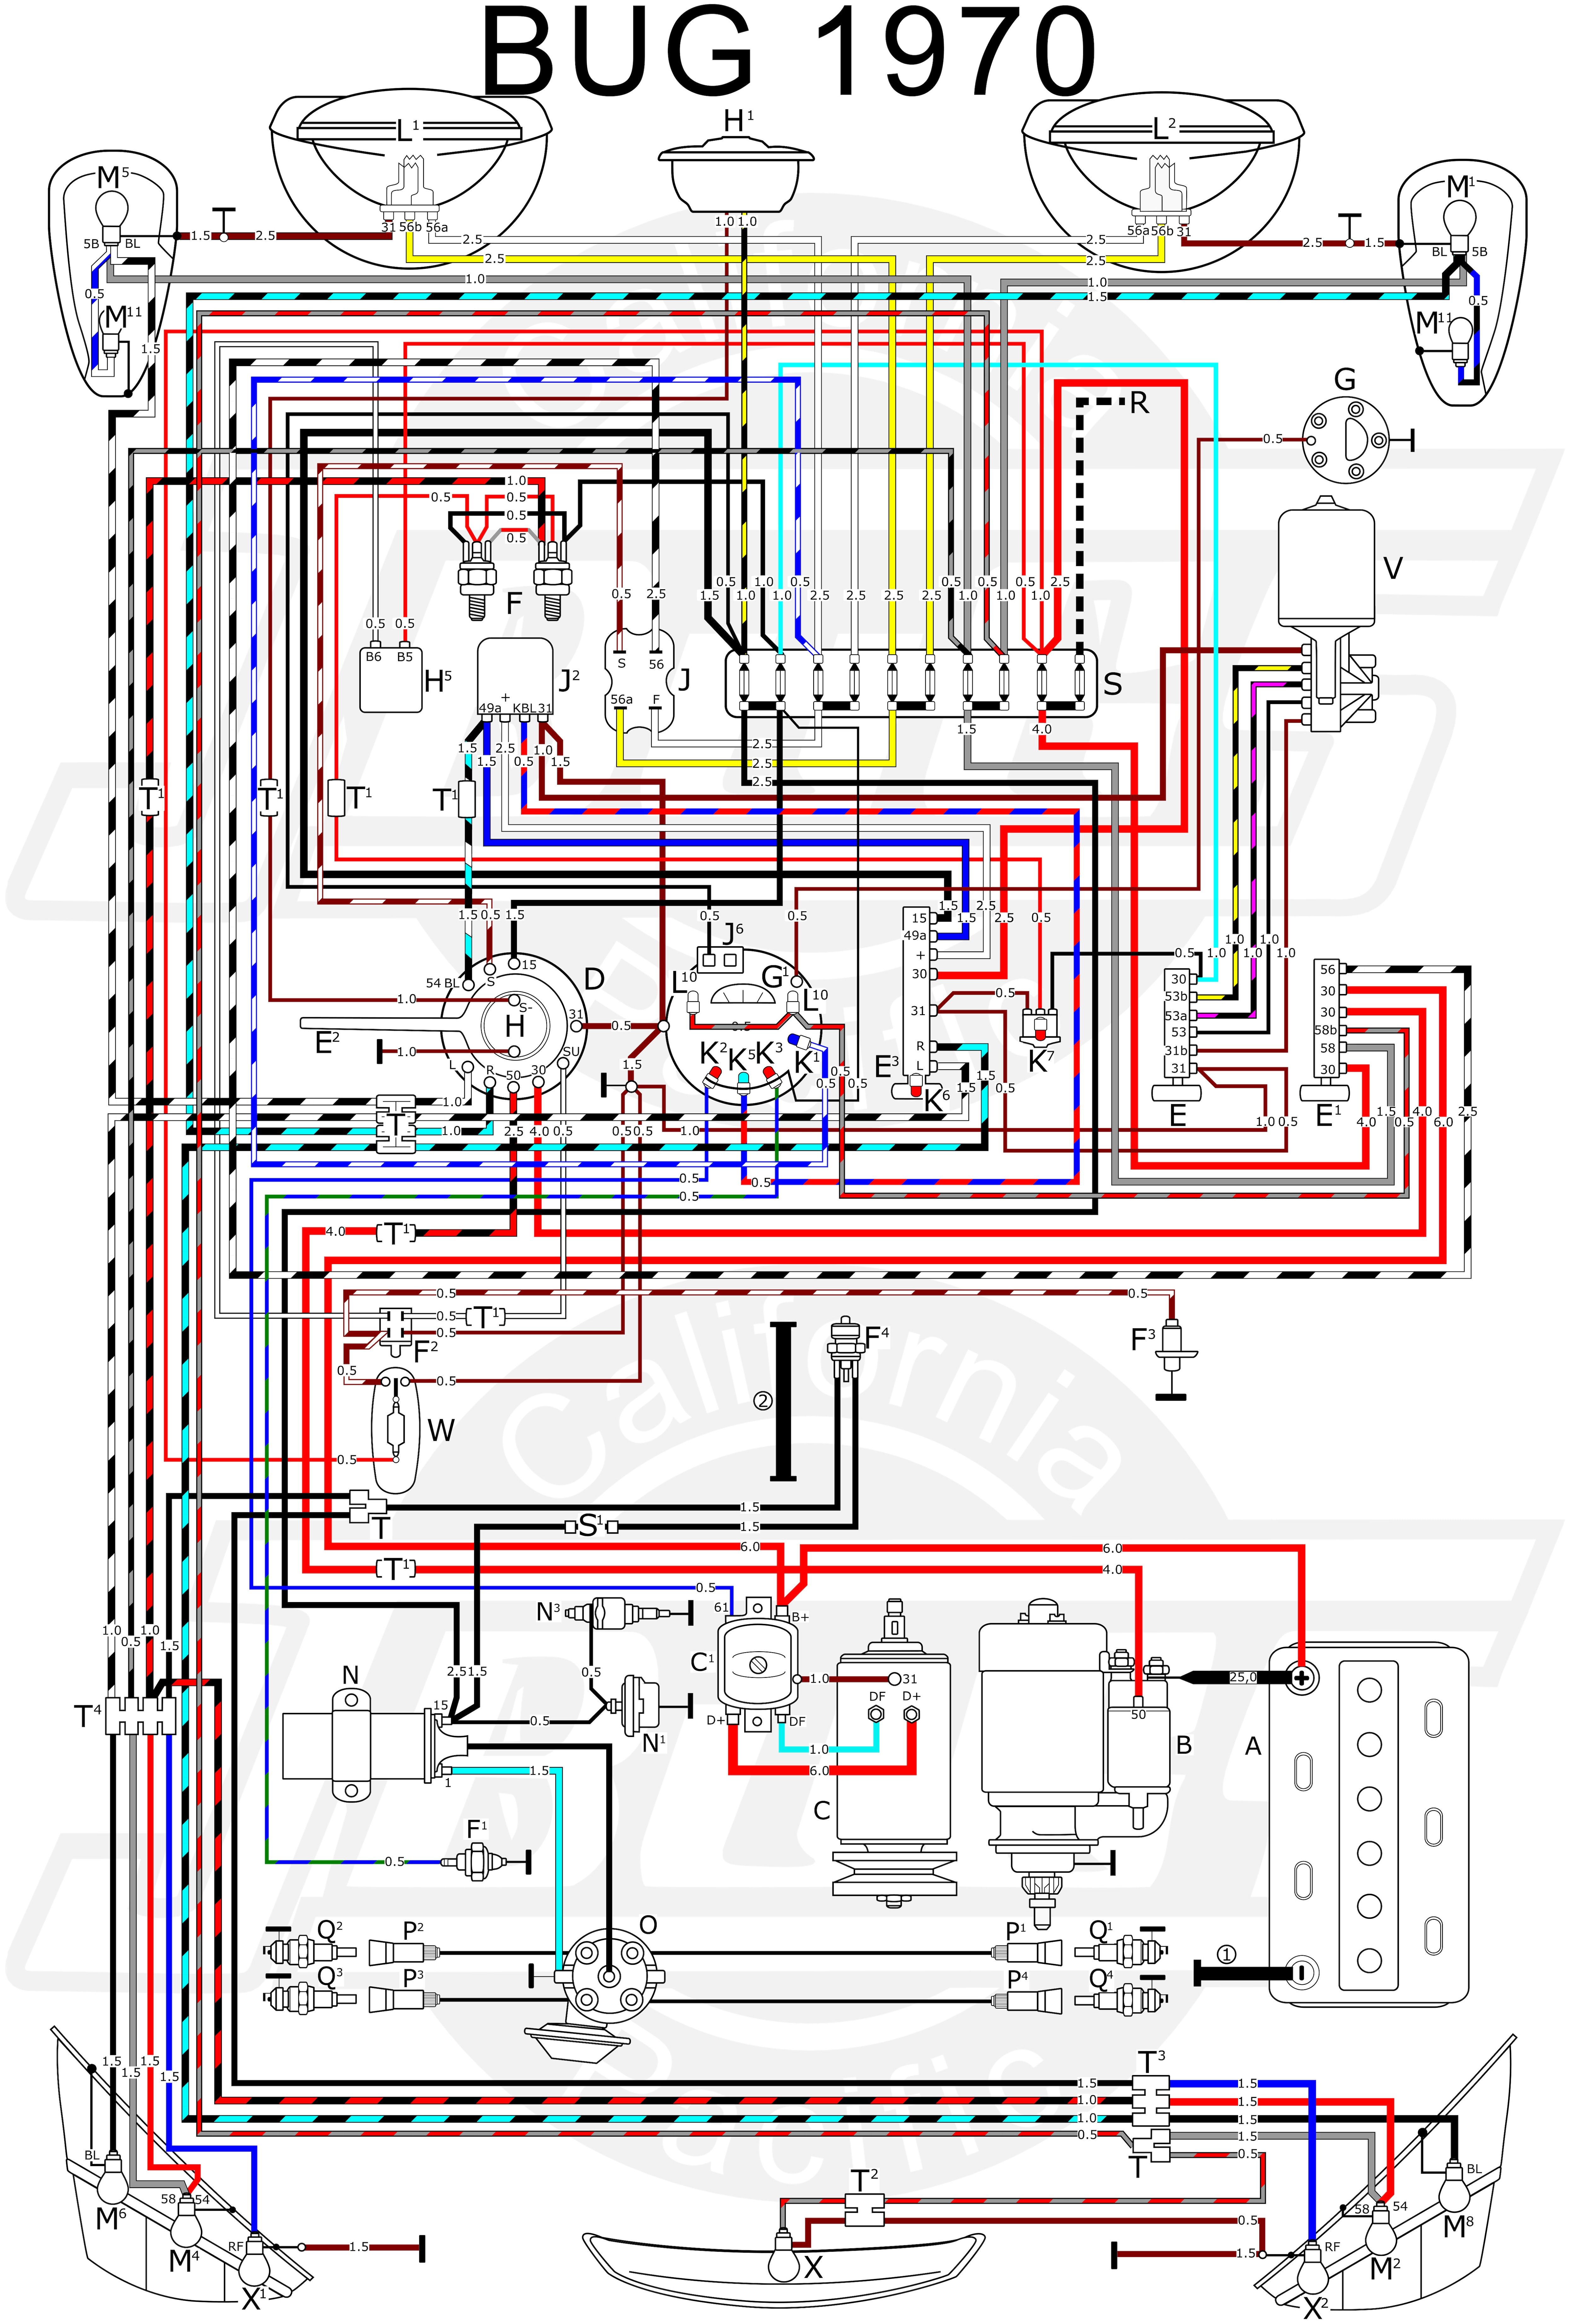 6 Volt To 12 Volt Conversion Wiring Diagram Jeep Cj3A | Wiring Diagram - 6 Volt To 12 Volt Conversion Wiring Diagram